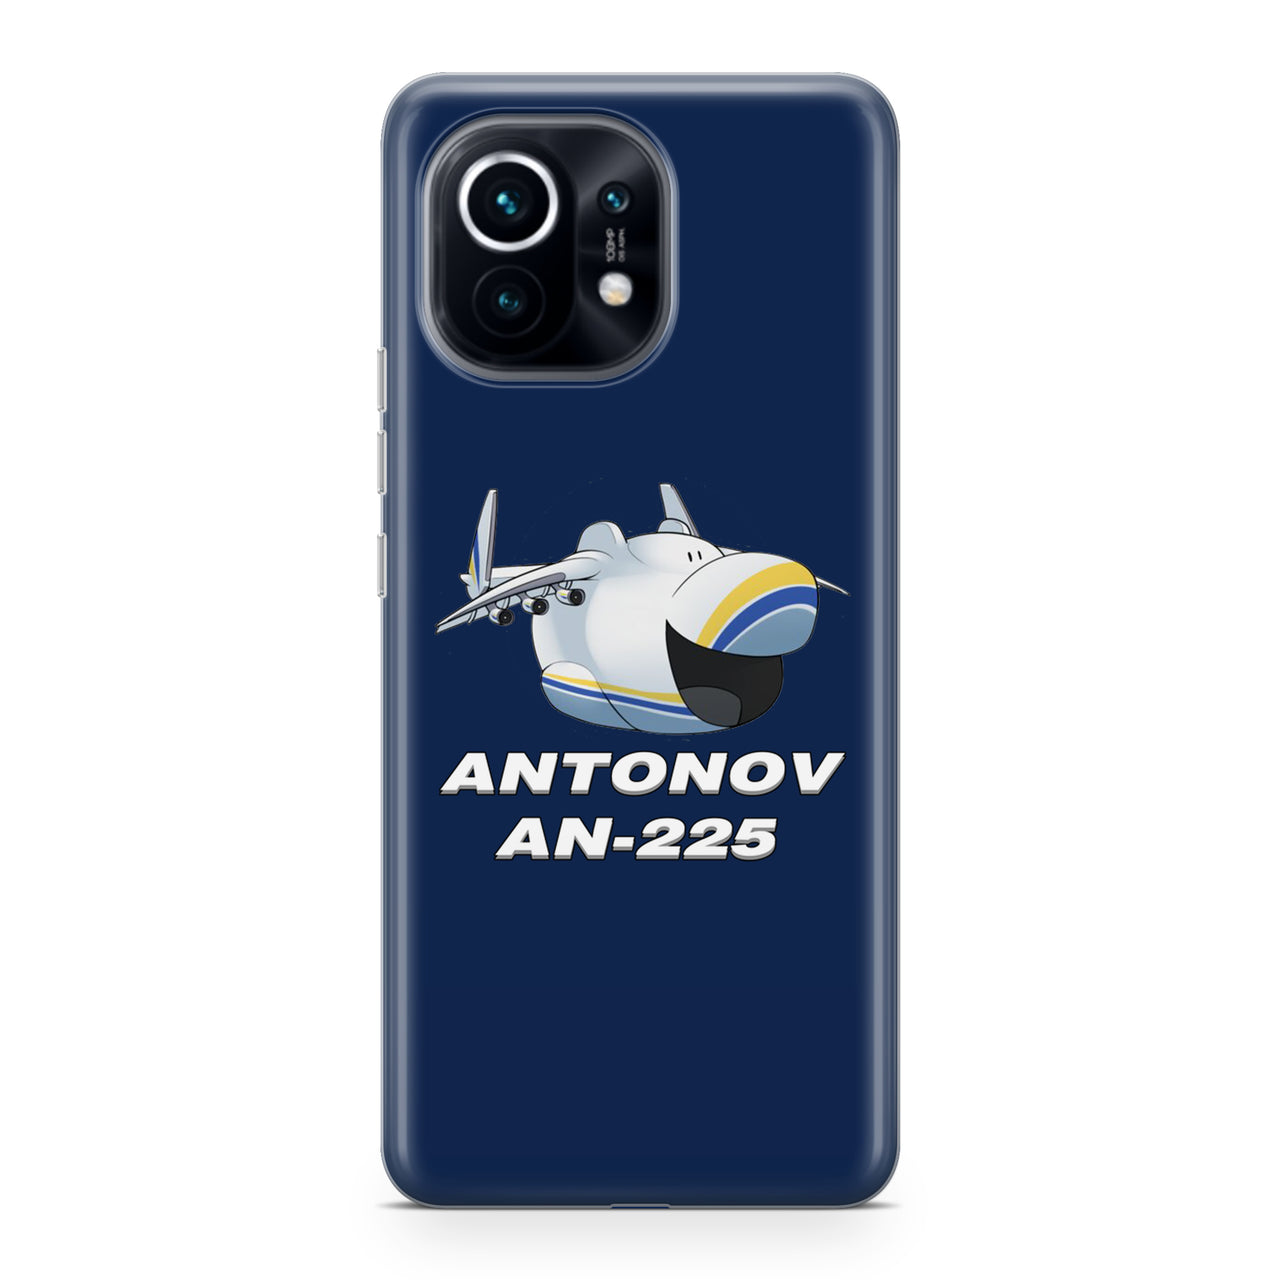 Antonov AN-225 (23) Designed Xiaomi Cases